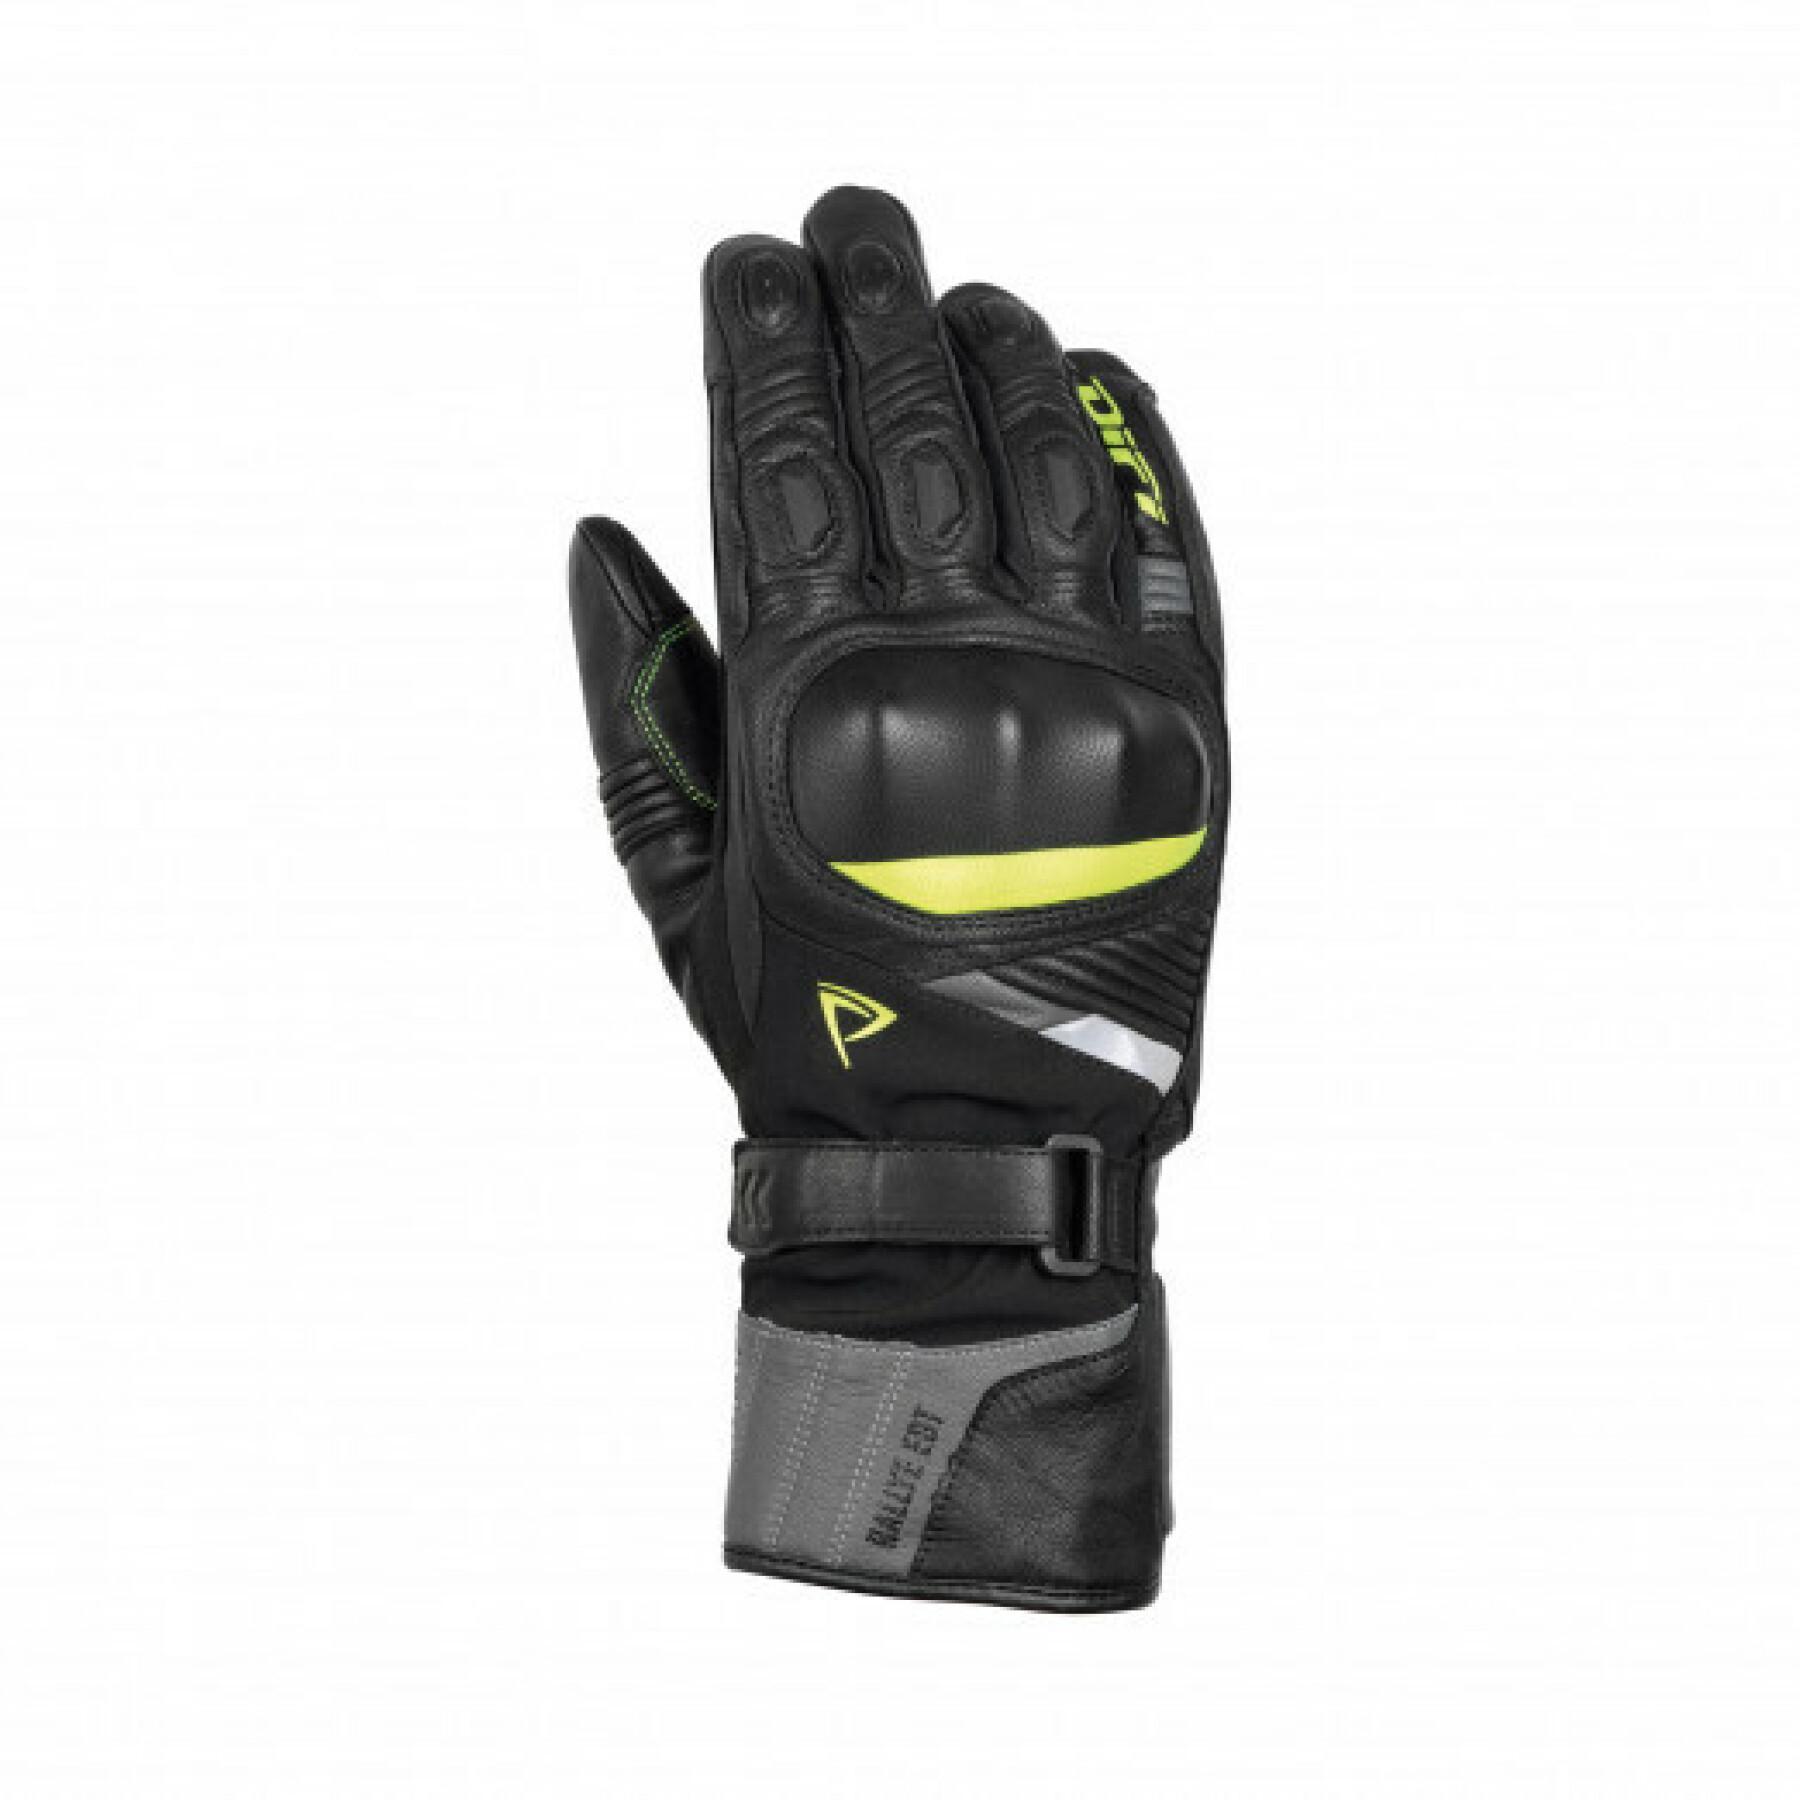 Heated motorcycle gloves Difi rallye edt aerotex